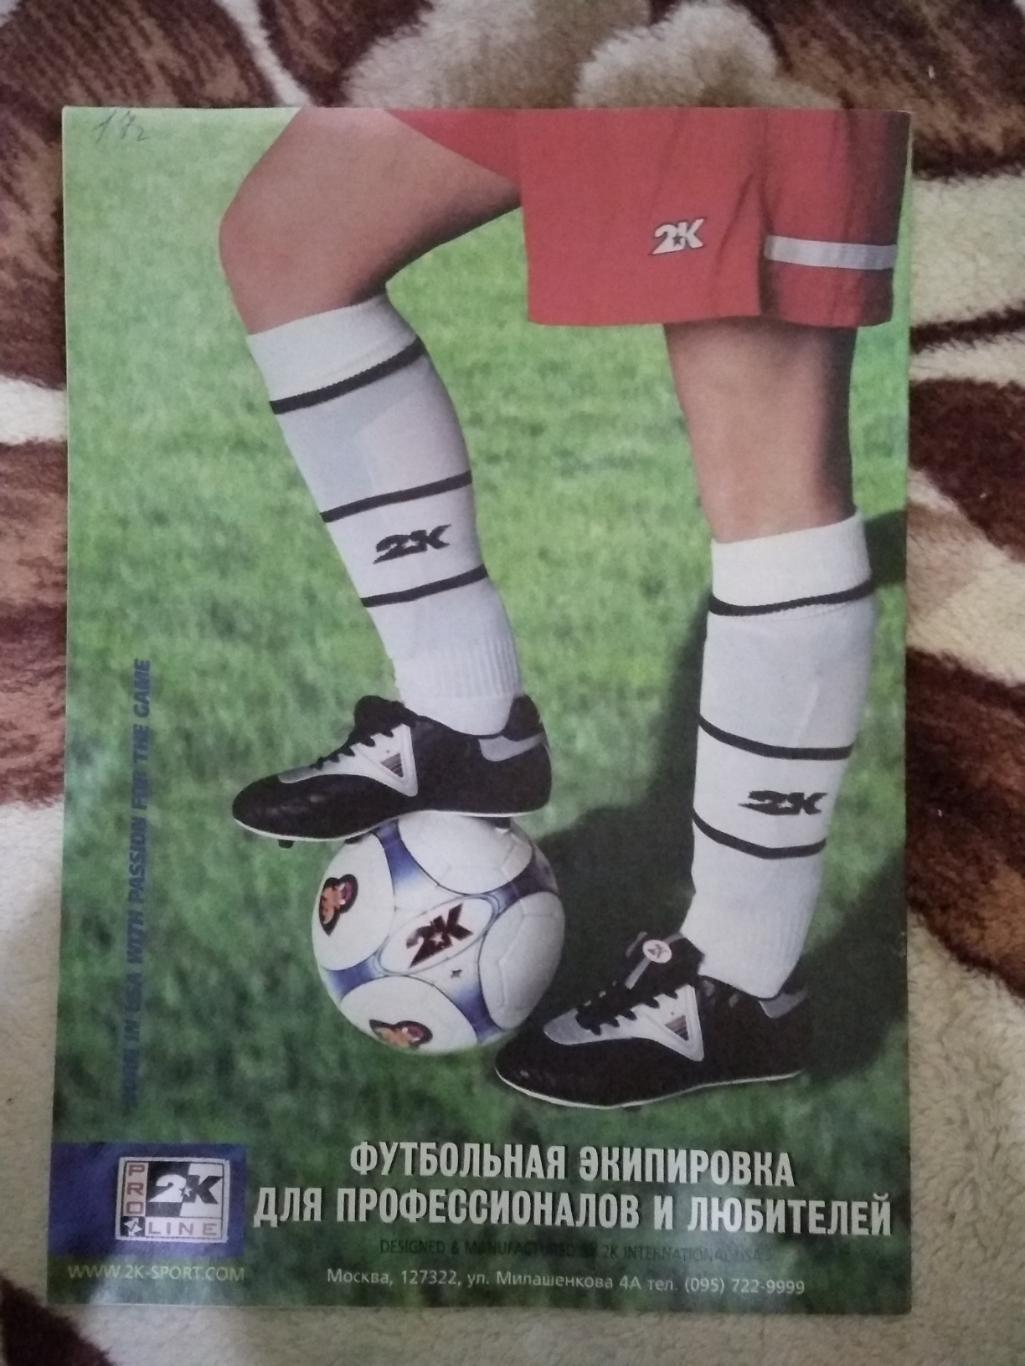 Журнал.Мой футбол №20 2002 г. (Чемпионат мира) (постер). 2